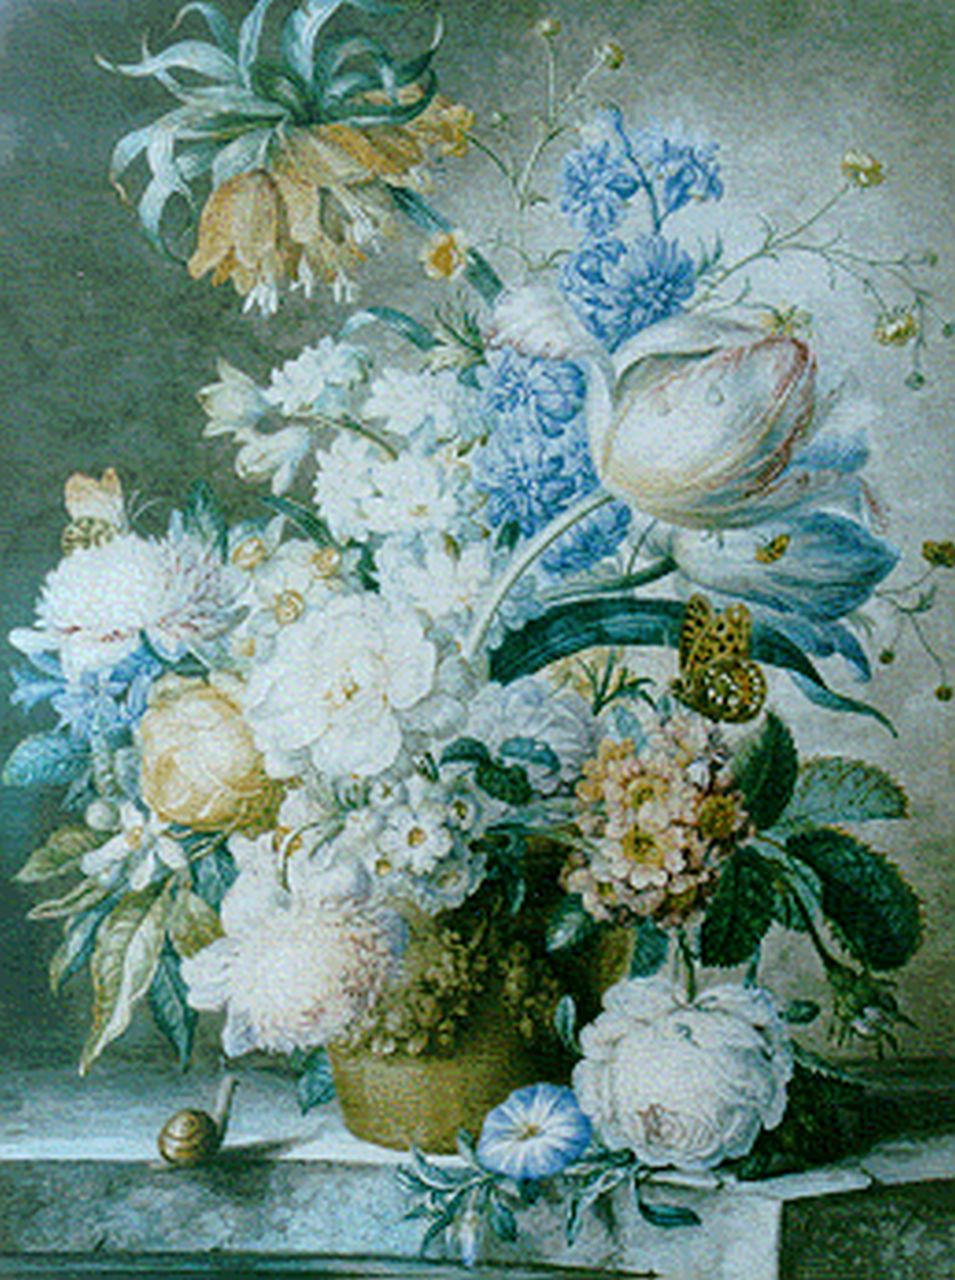 Oswald Wijnen | A bunch of wildflowers, Aquarell auf Papier, 30,3 x 23,0 cm, signed l.r. und dated 1777